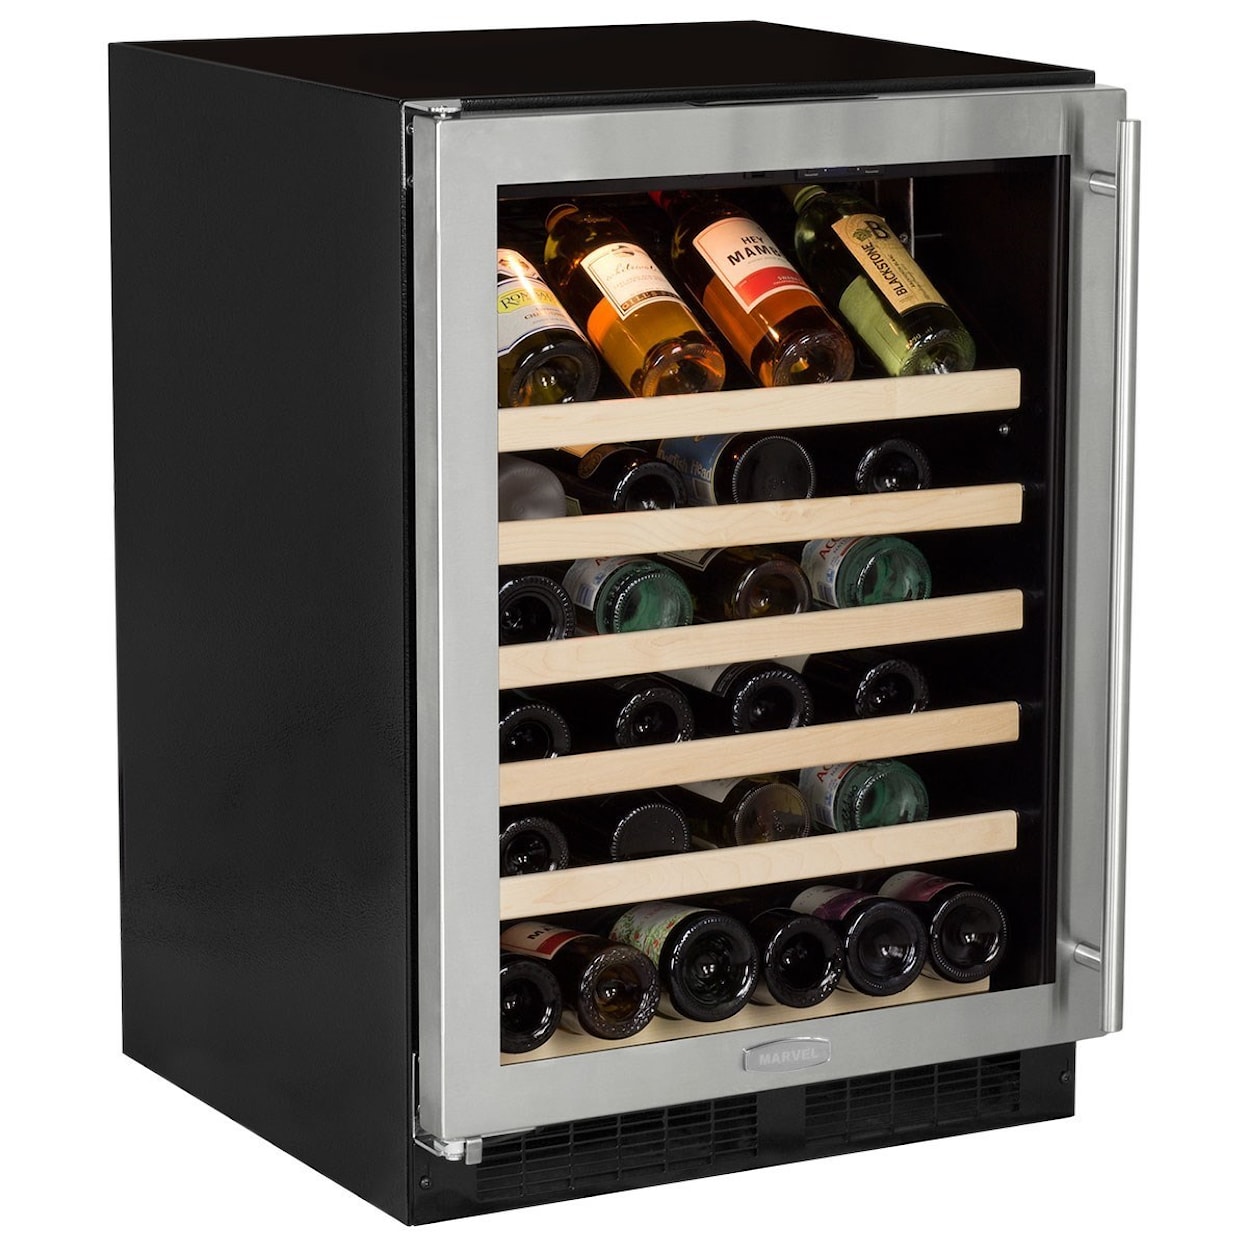 Marvel Industries Wine Coolers - Marvel 24" Single Zone Wine Refrigerator